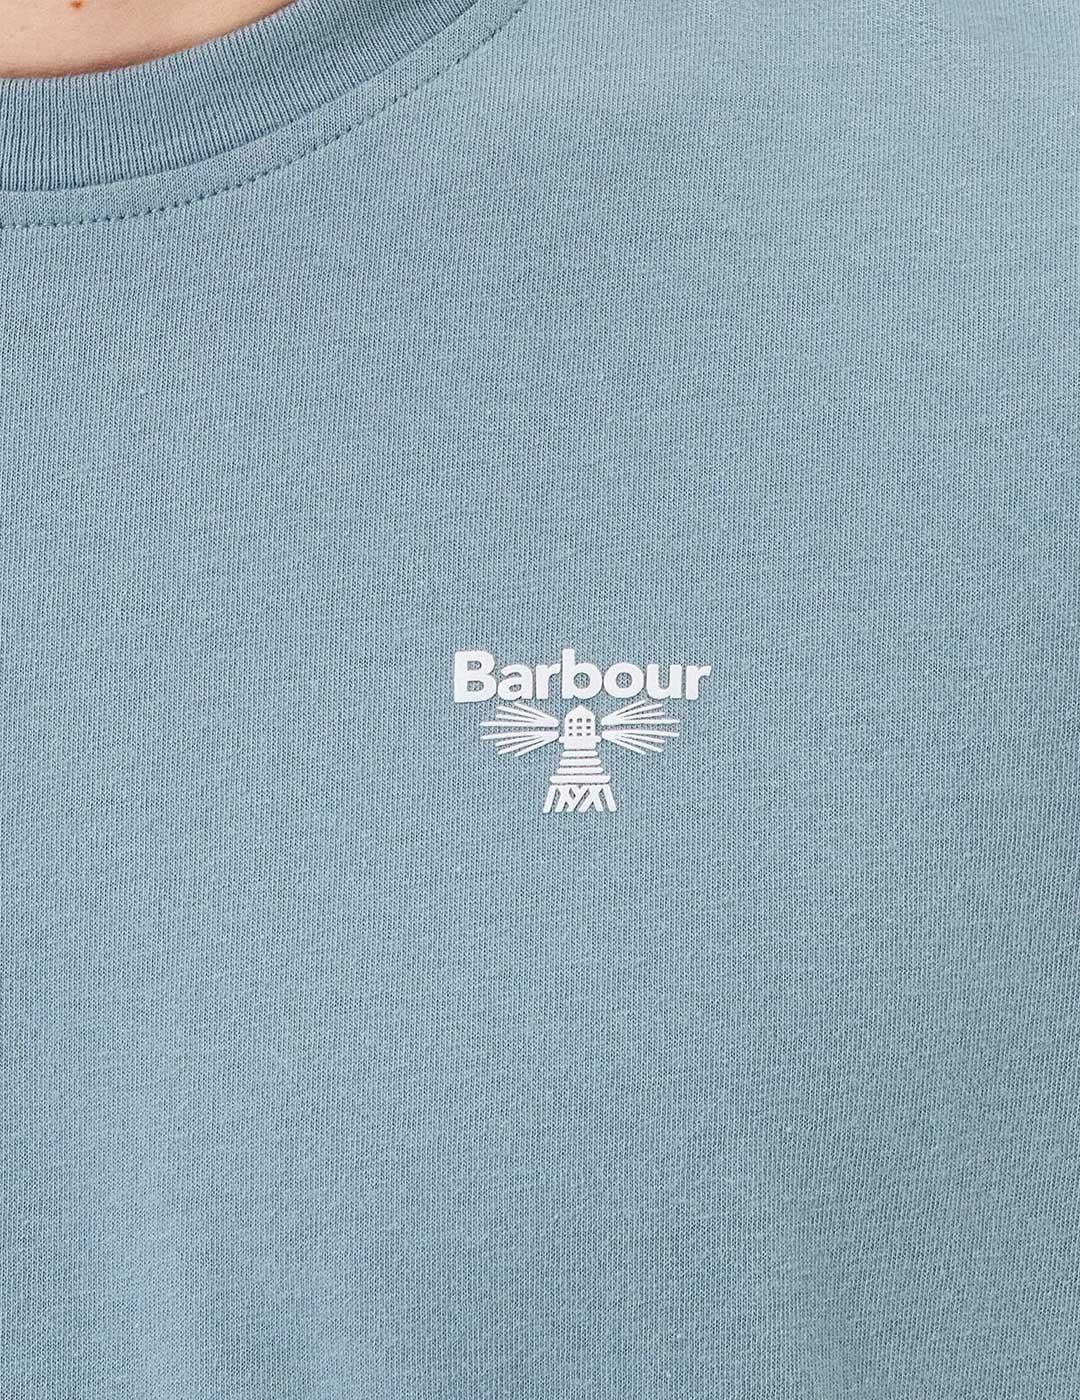 Camiseta Barbour Brathay azul para hombre